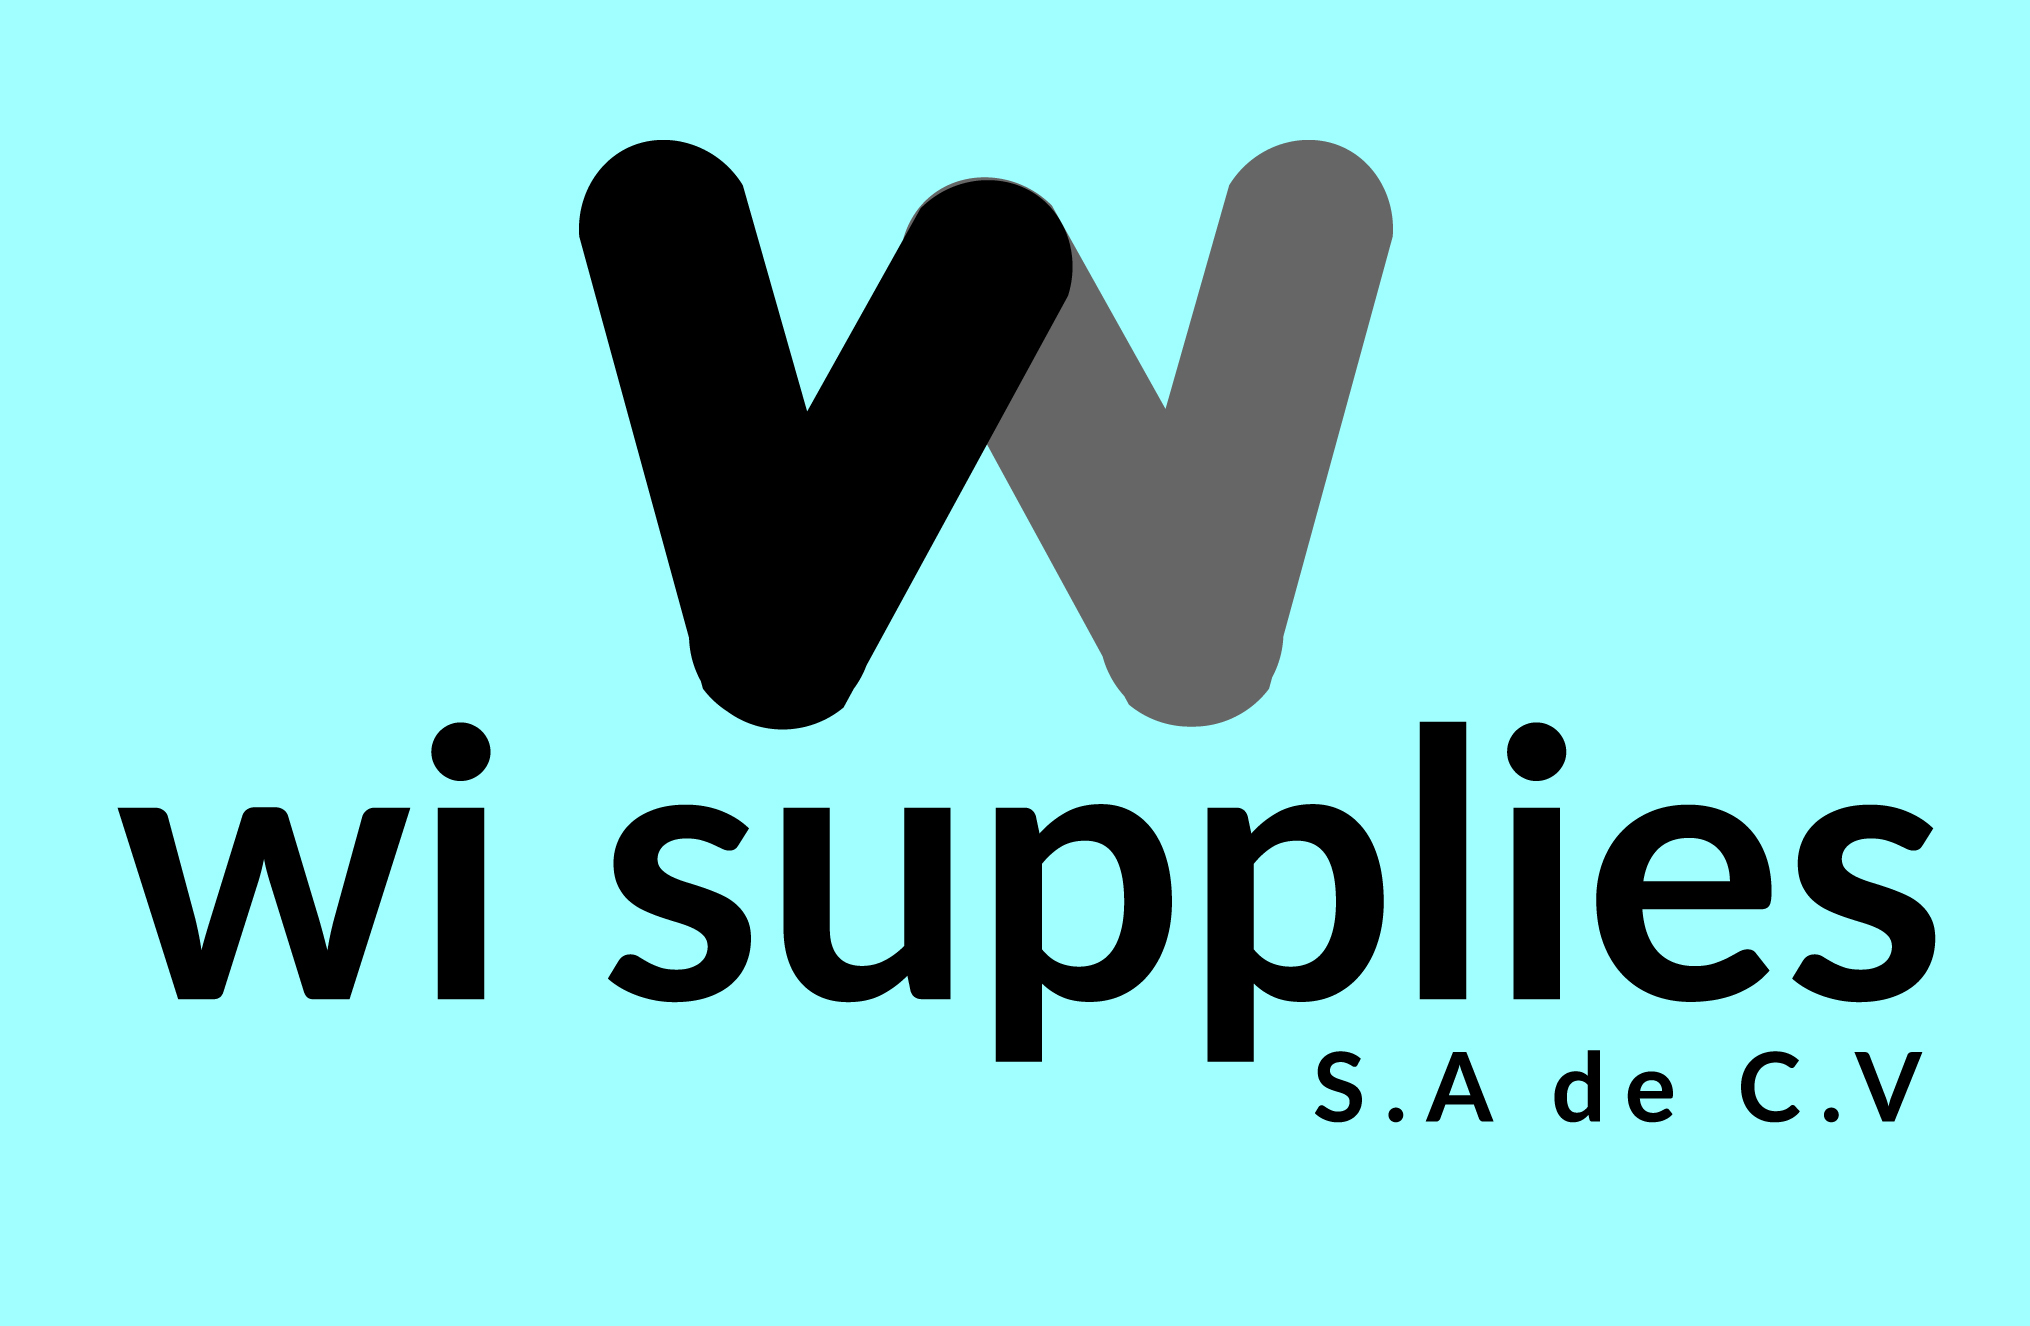 Bienvenidos a Wi Supplies S.A. de C.V.